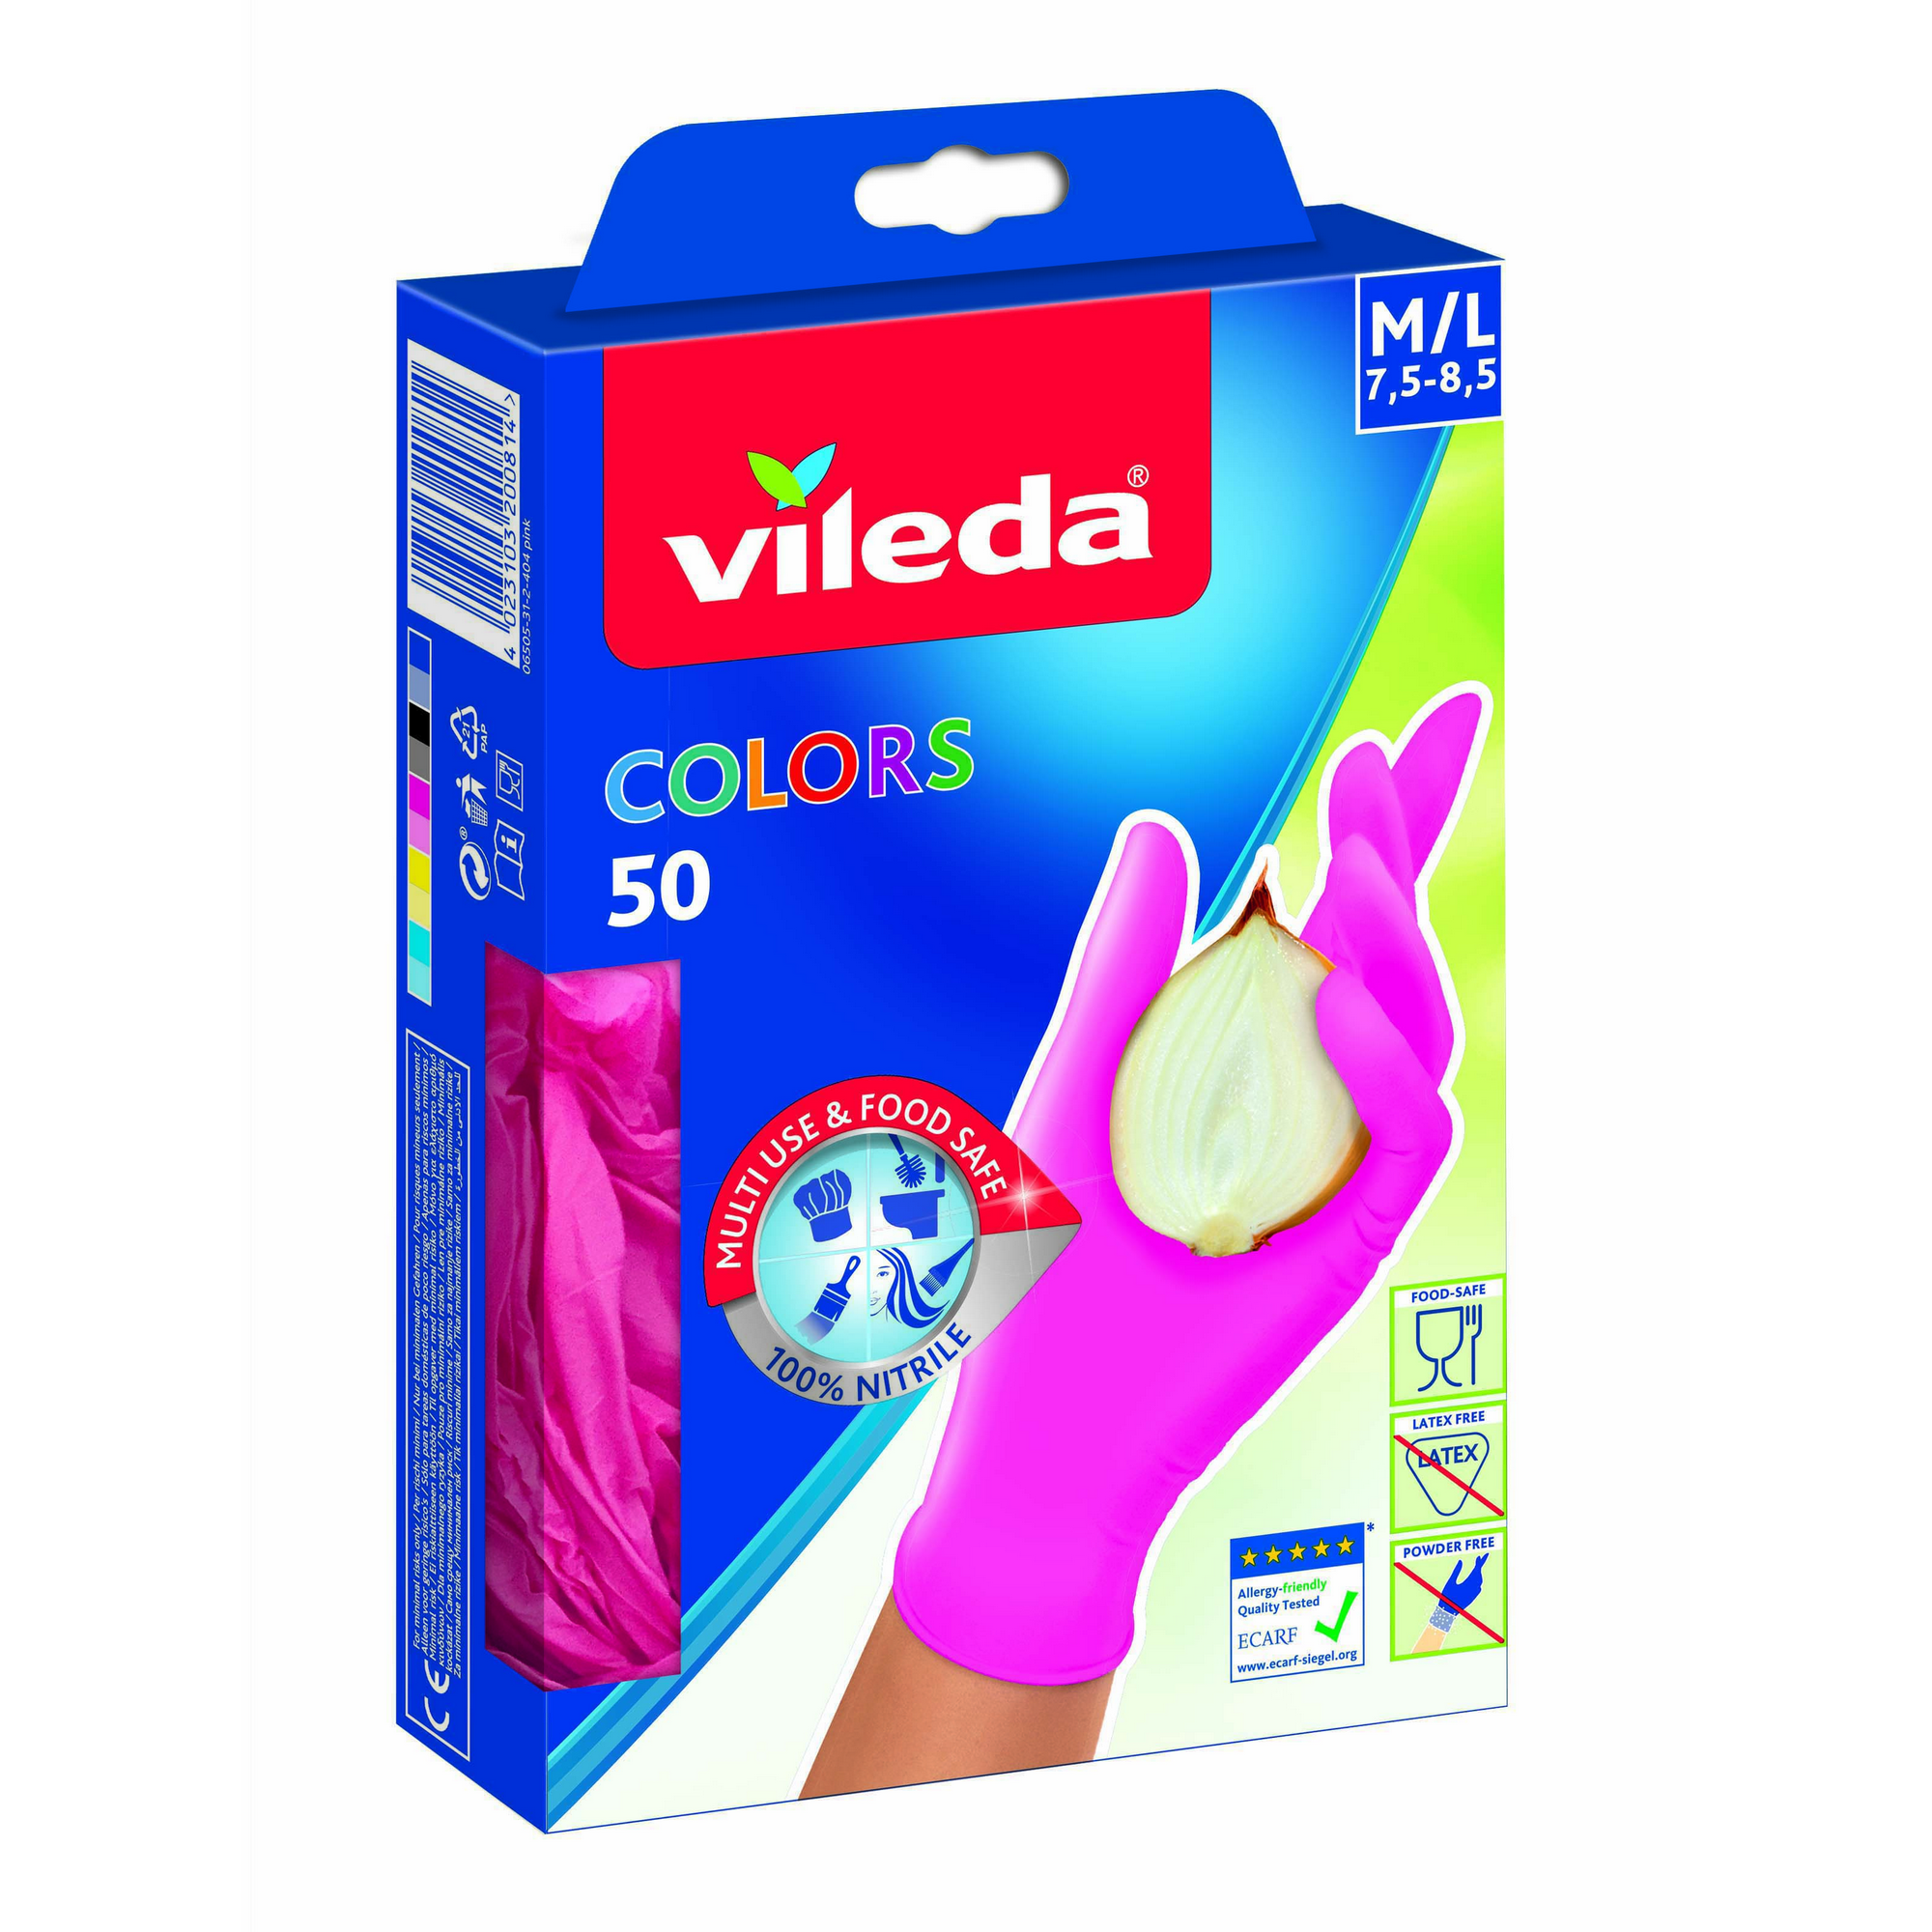 Einmalhandschuhe 'Colors Nitril' Größe M/L 50 Stück, 2 Farben sortiert + product picture